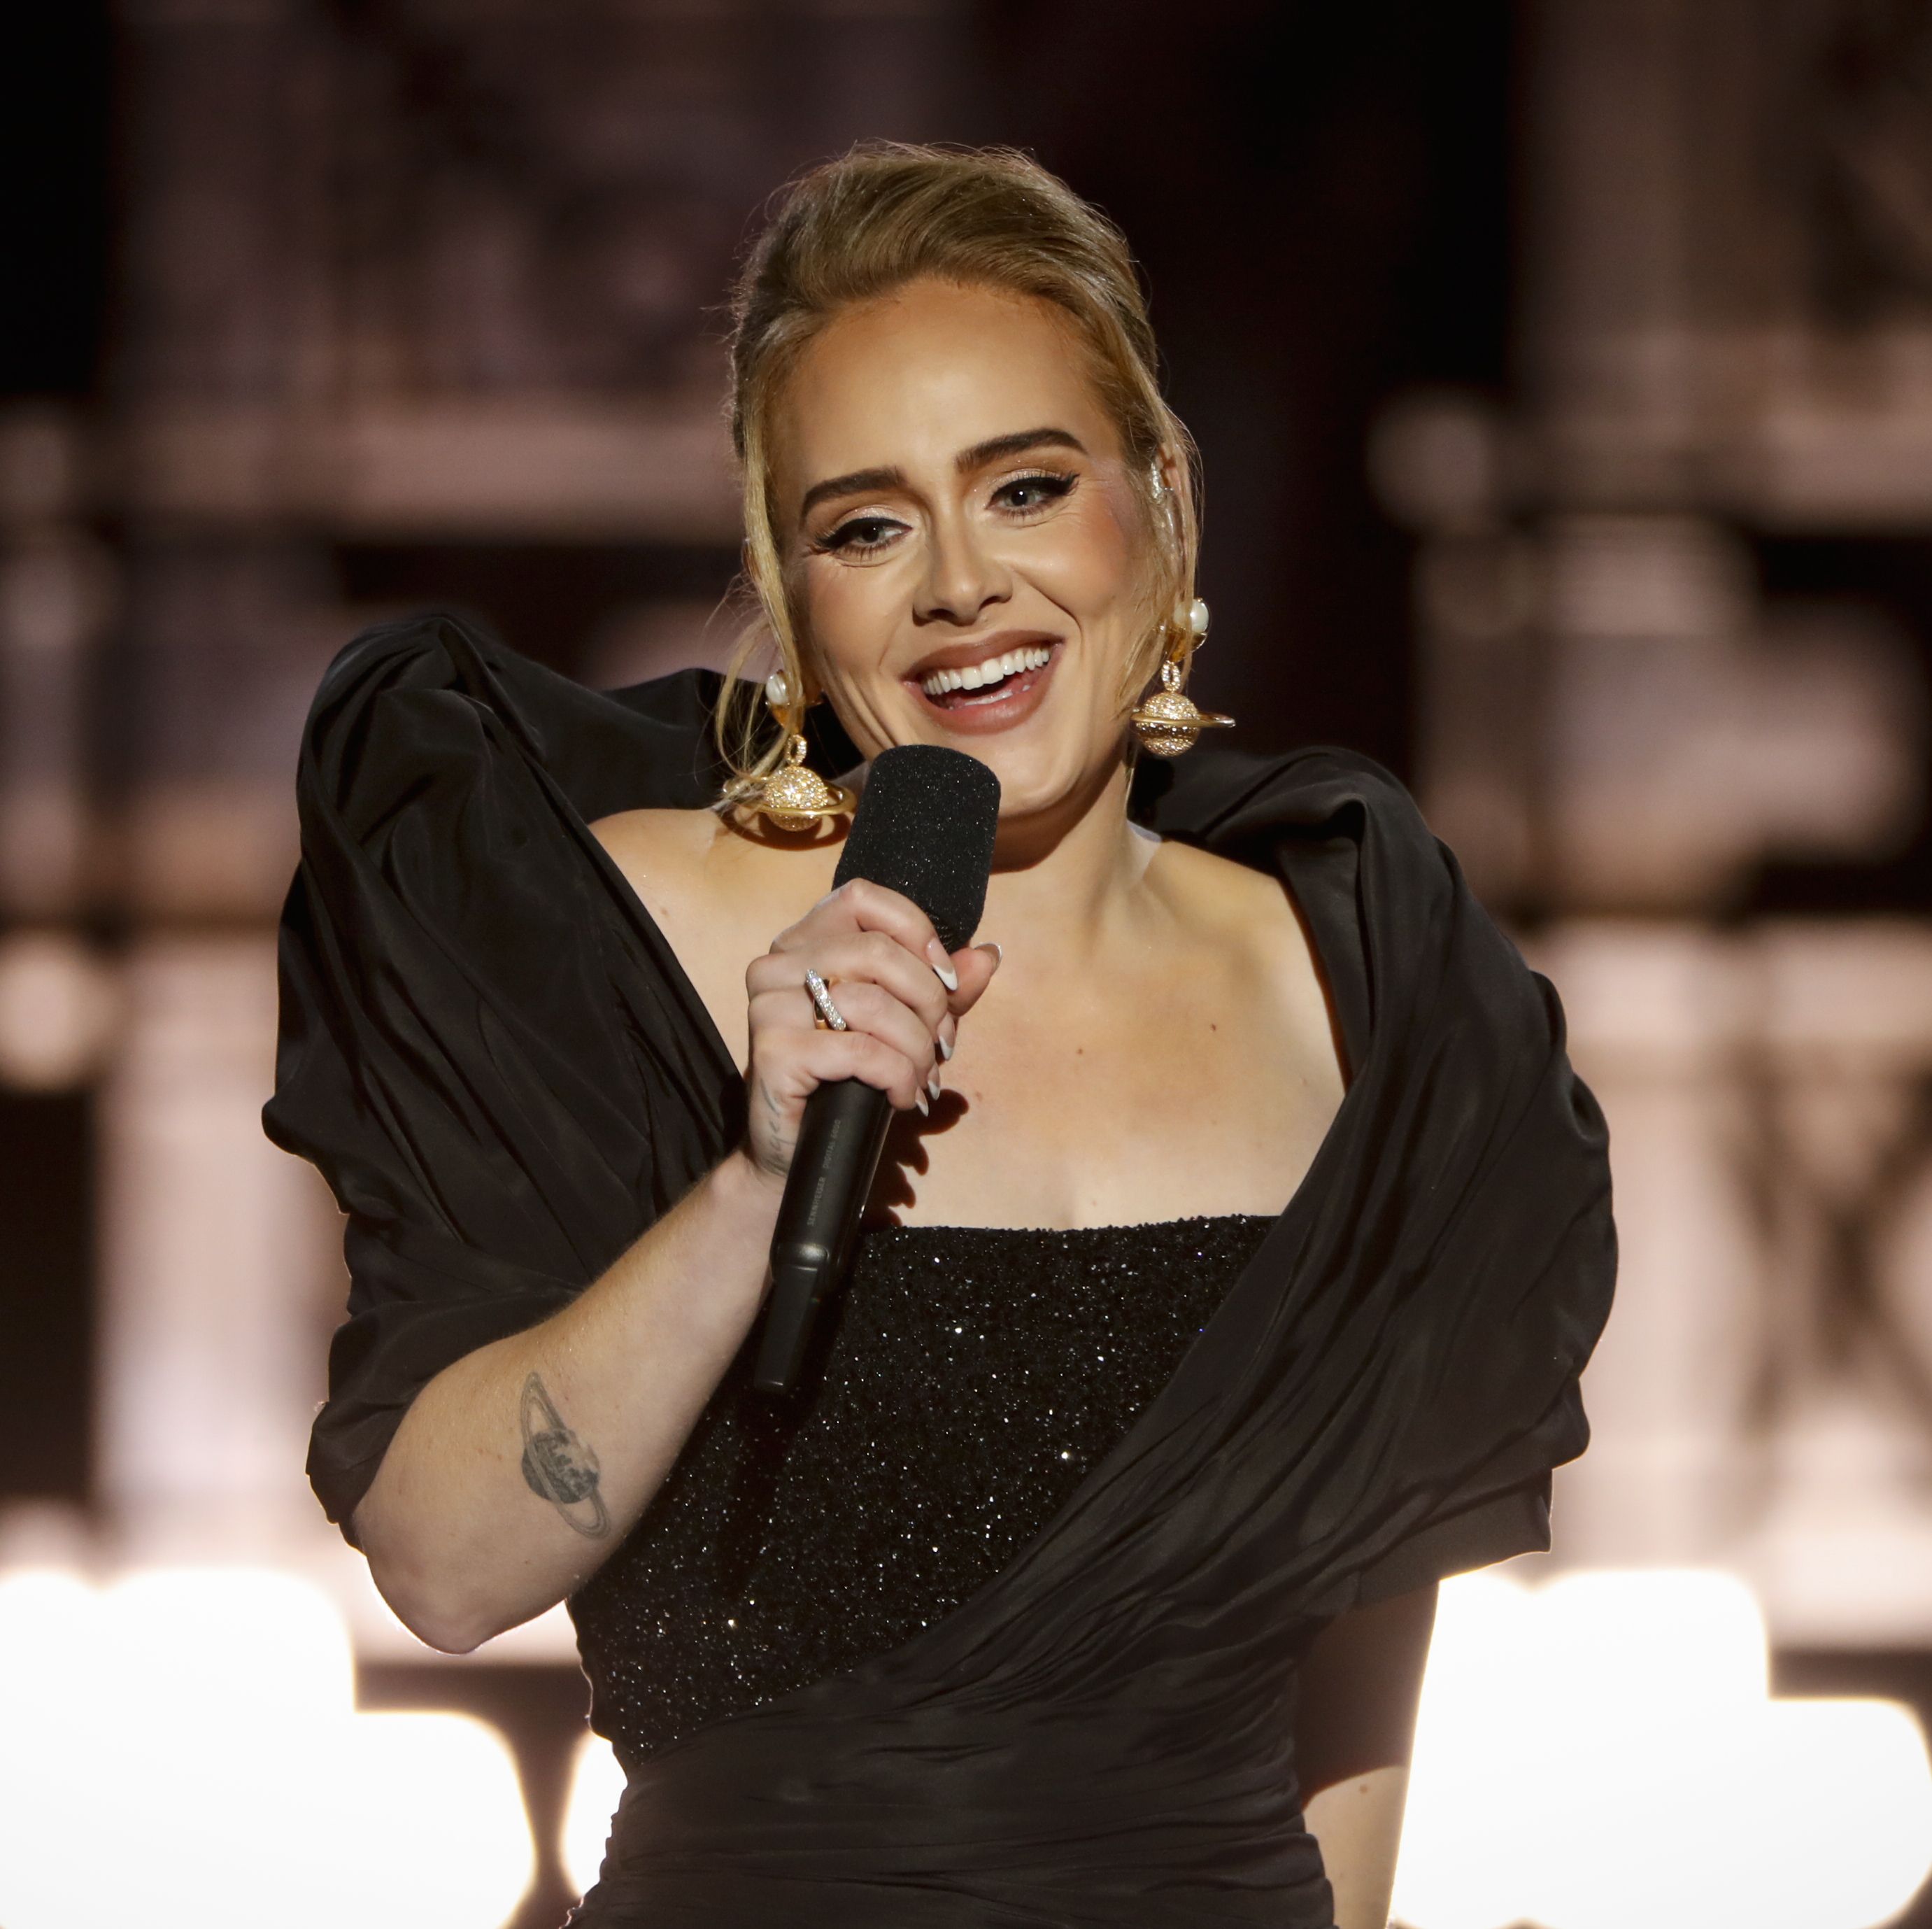 Sources Claim Adele's Las Vegas Residency Was Postponed Over 